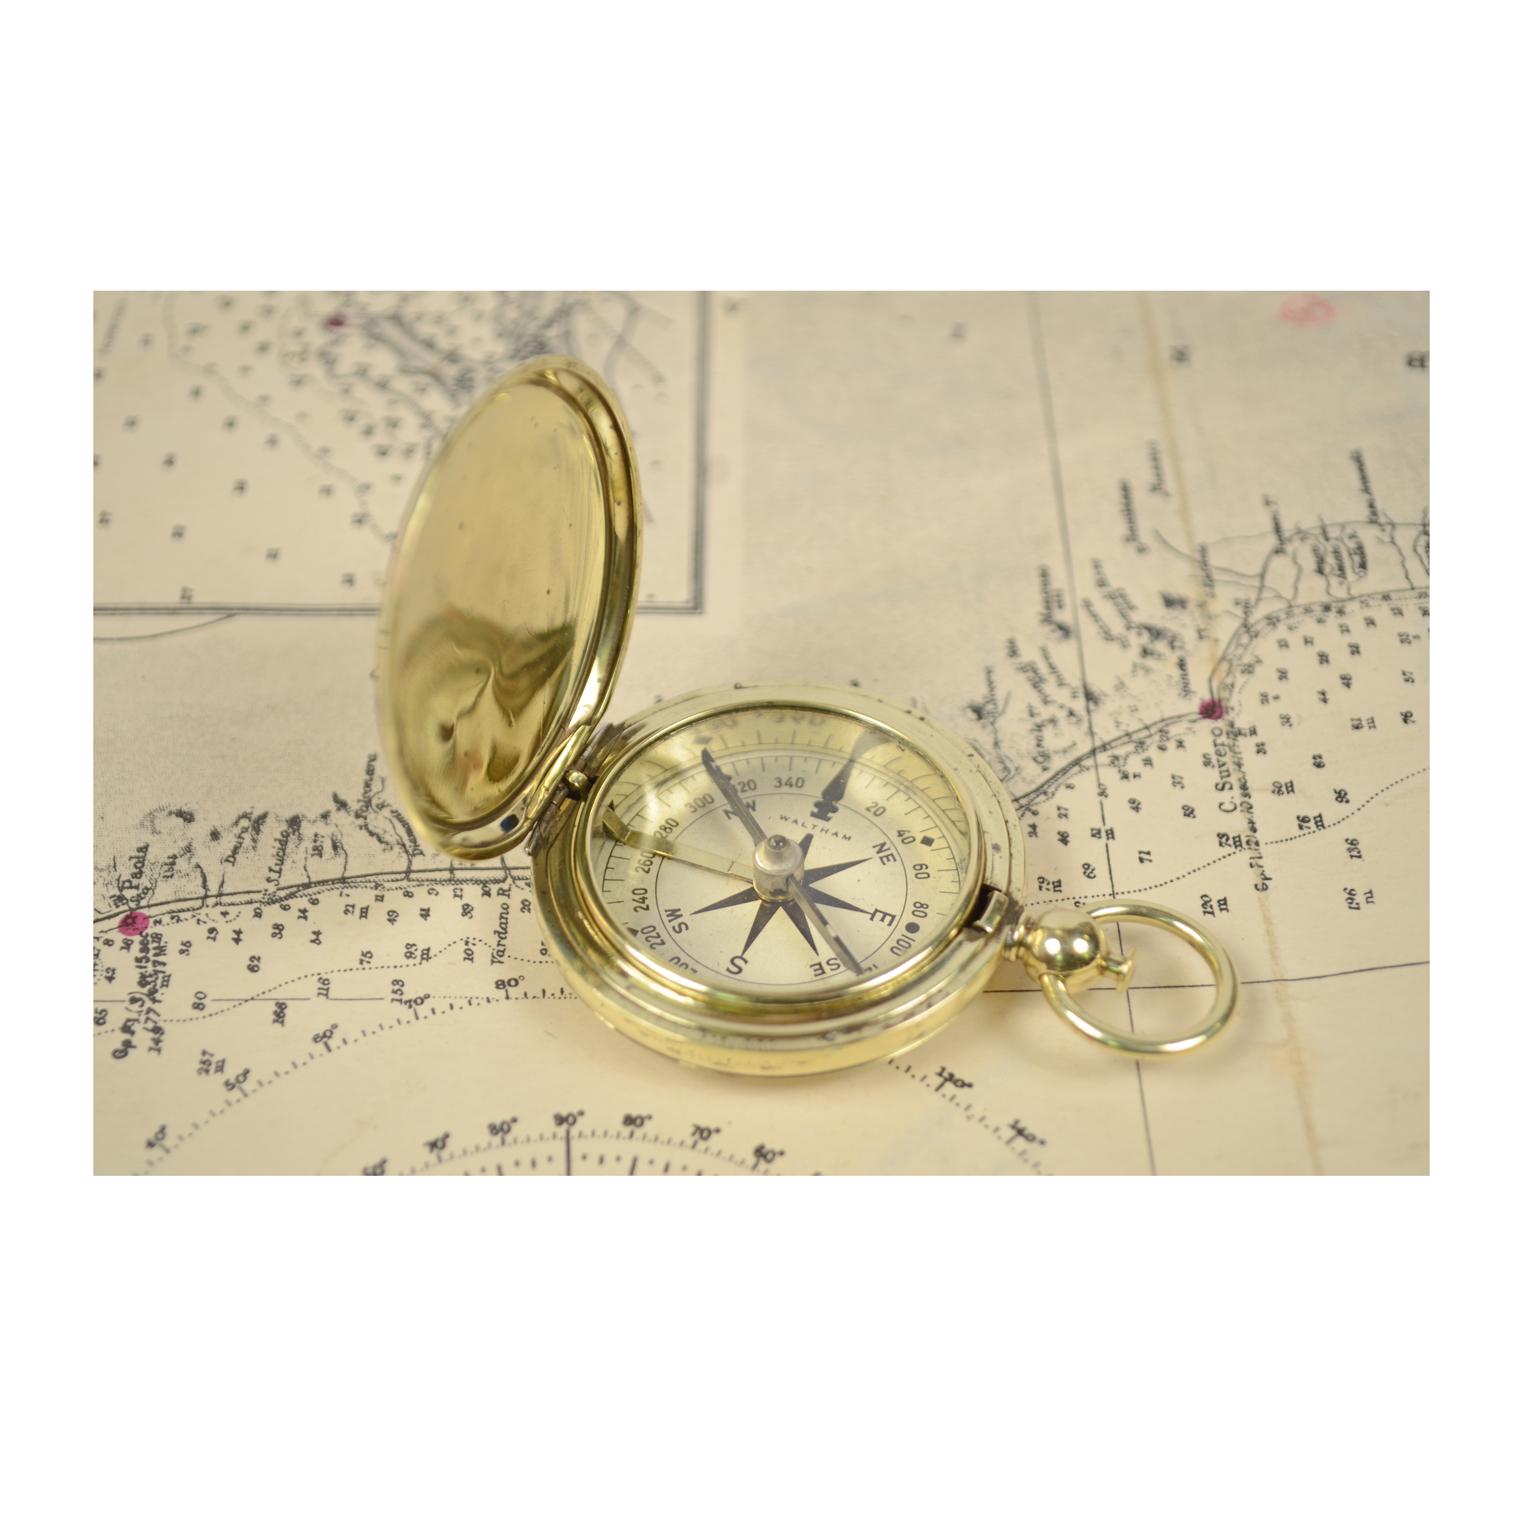 waltham compass marked u.s